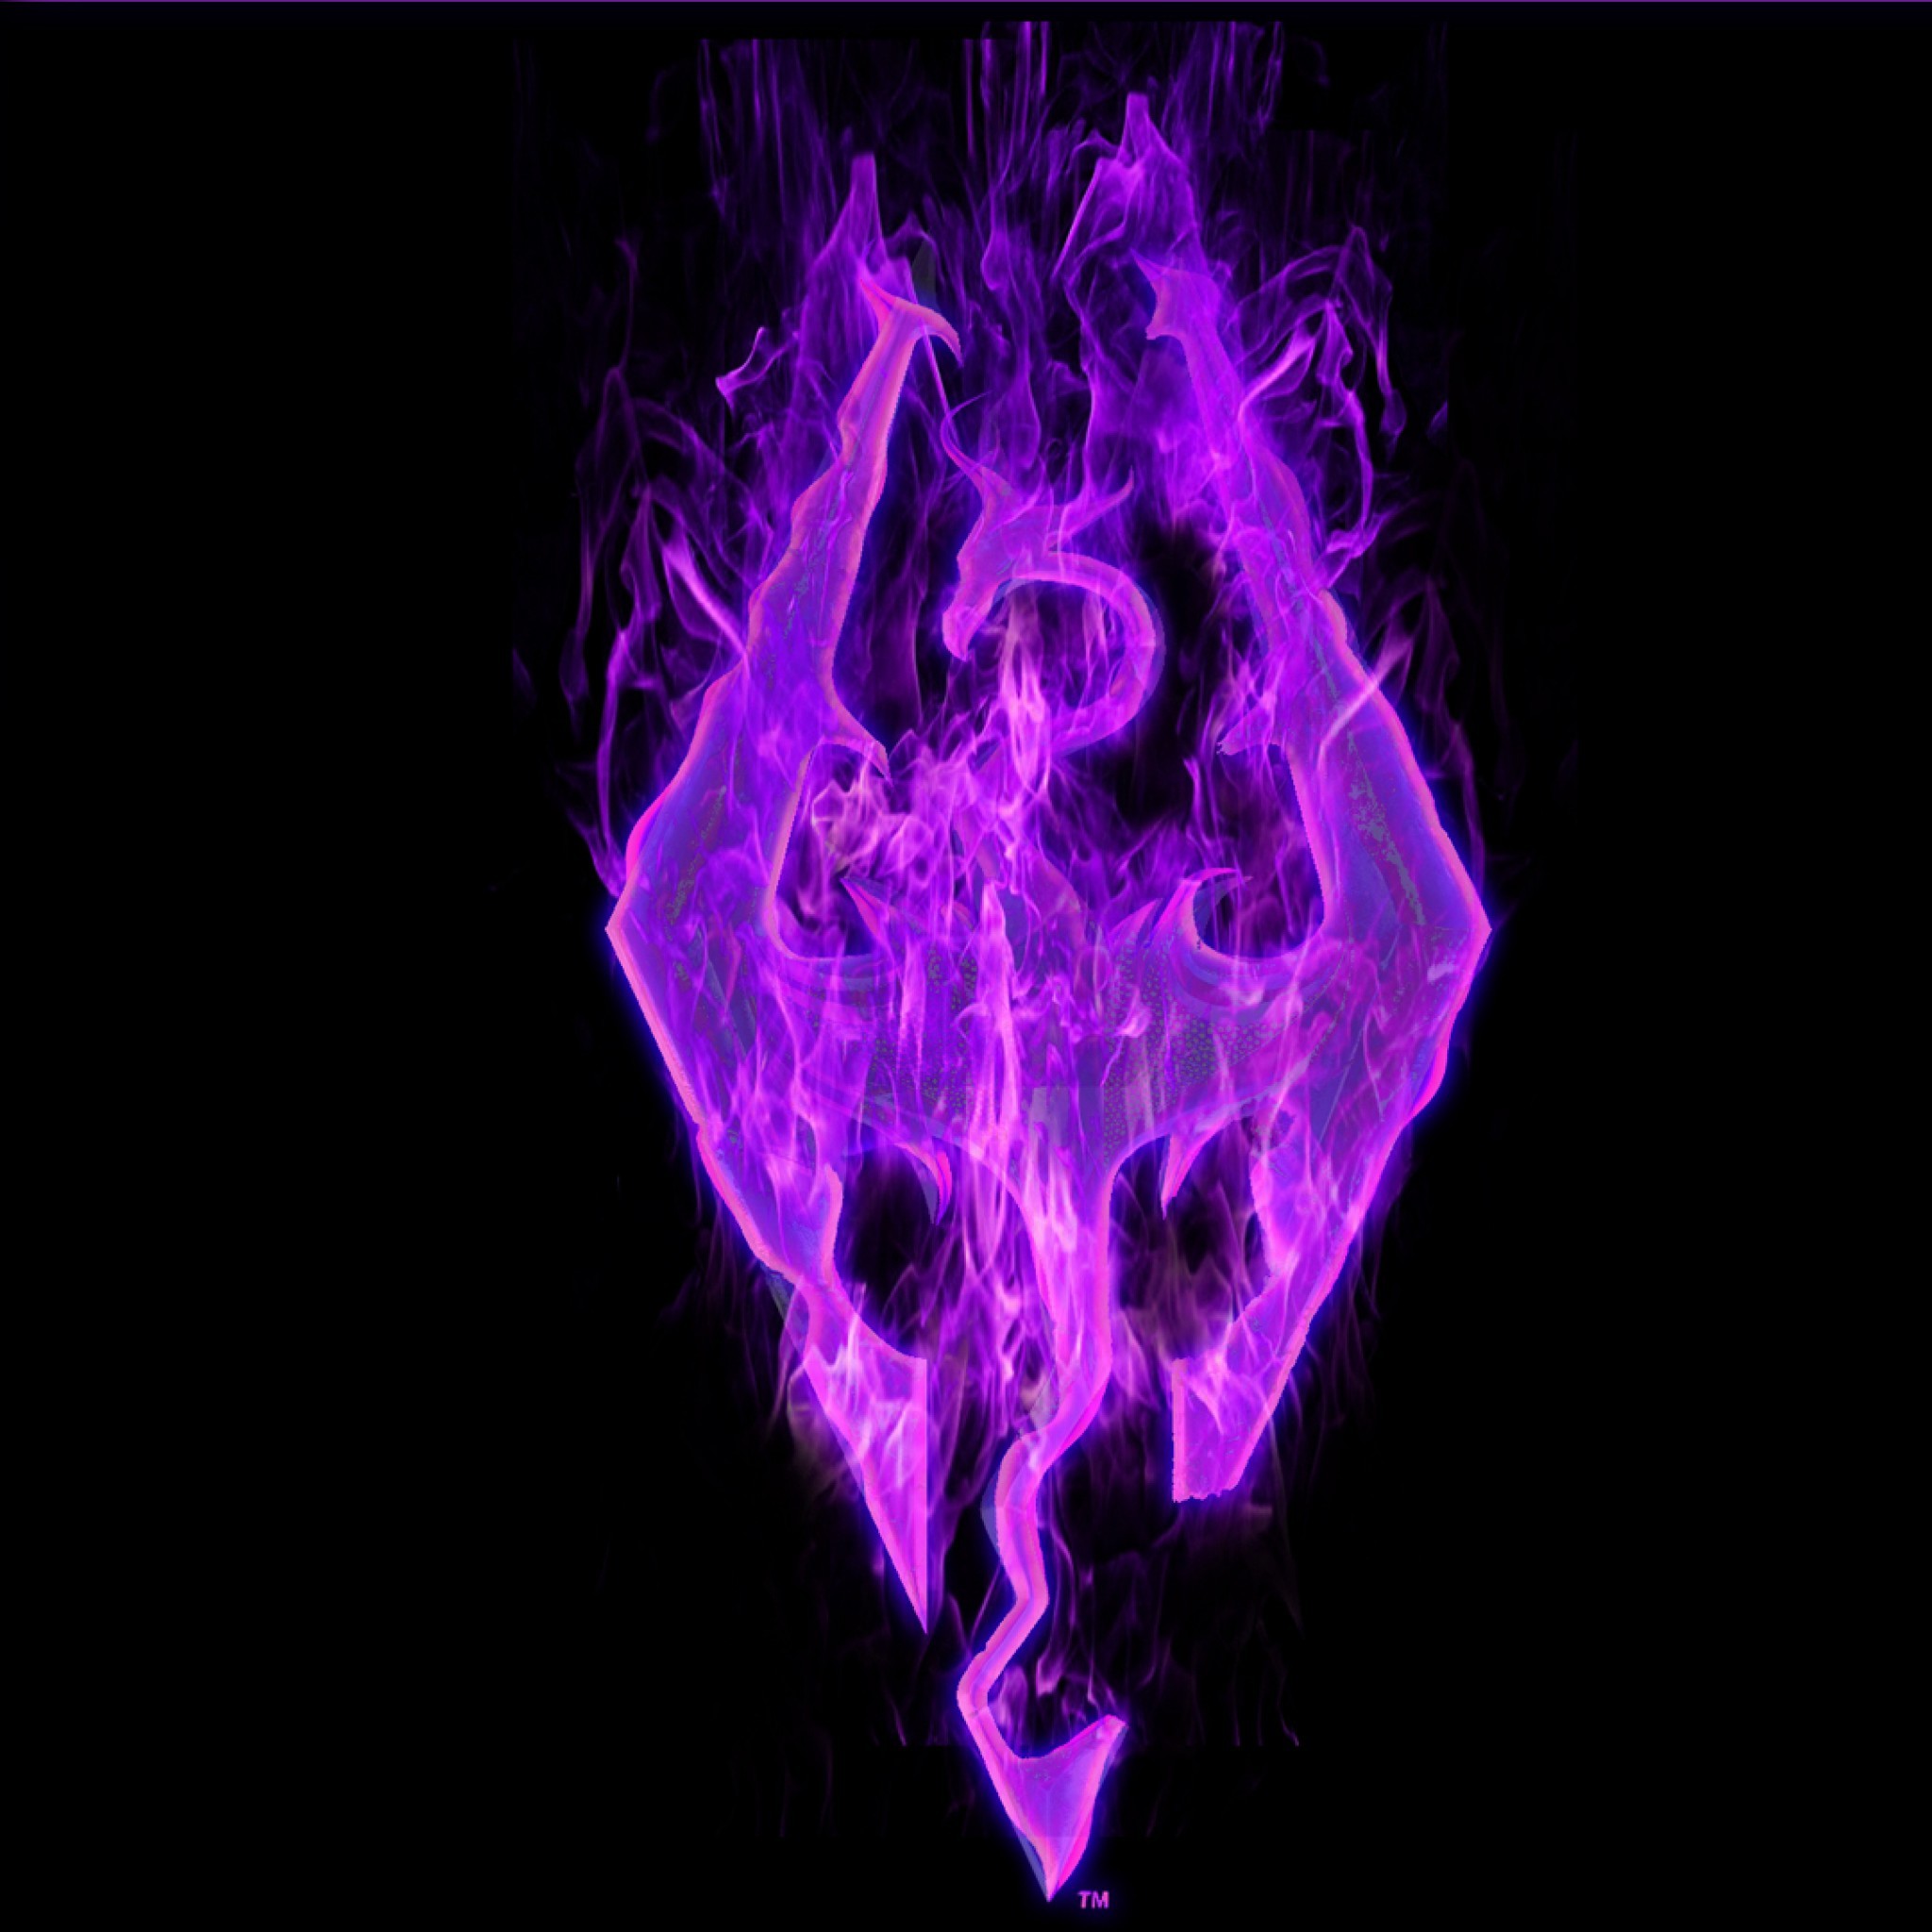 2048x2048 purple flames wallpaper